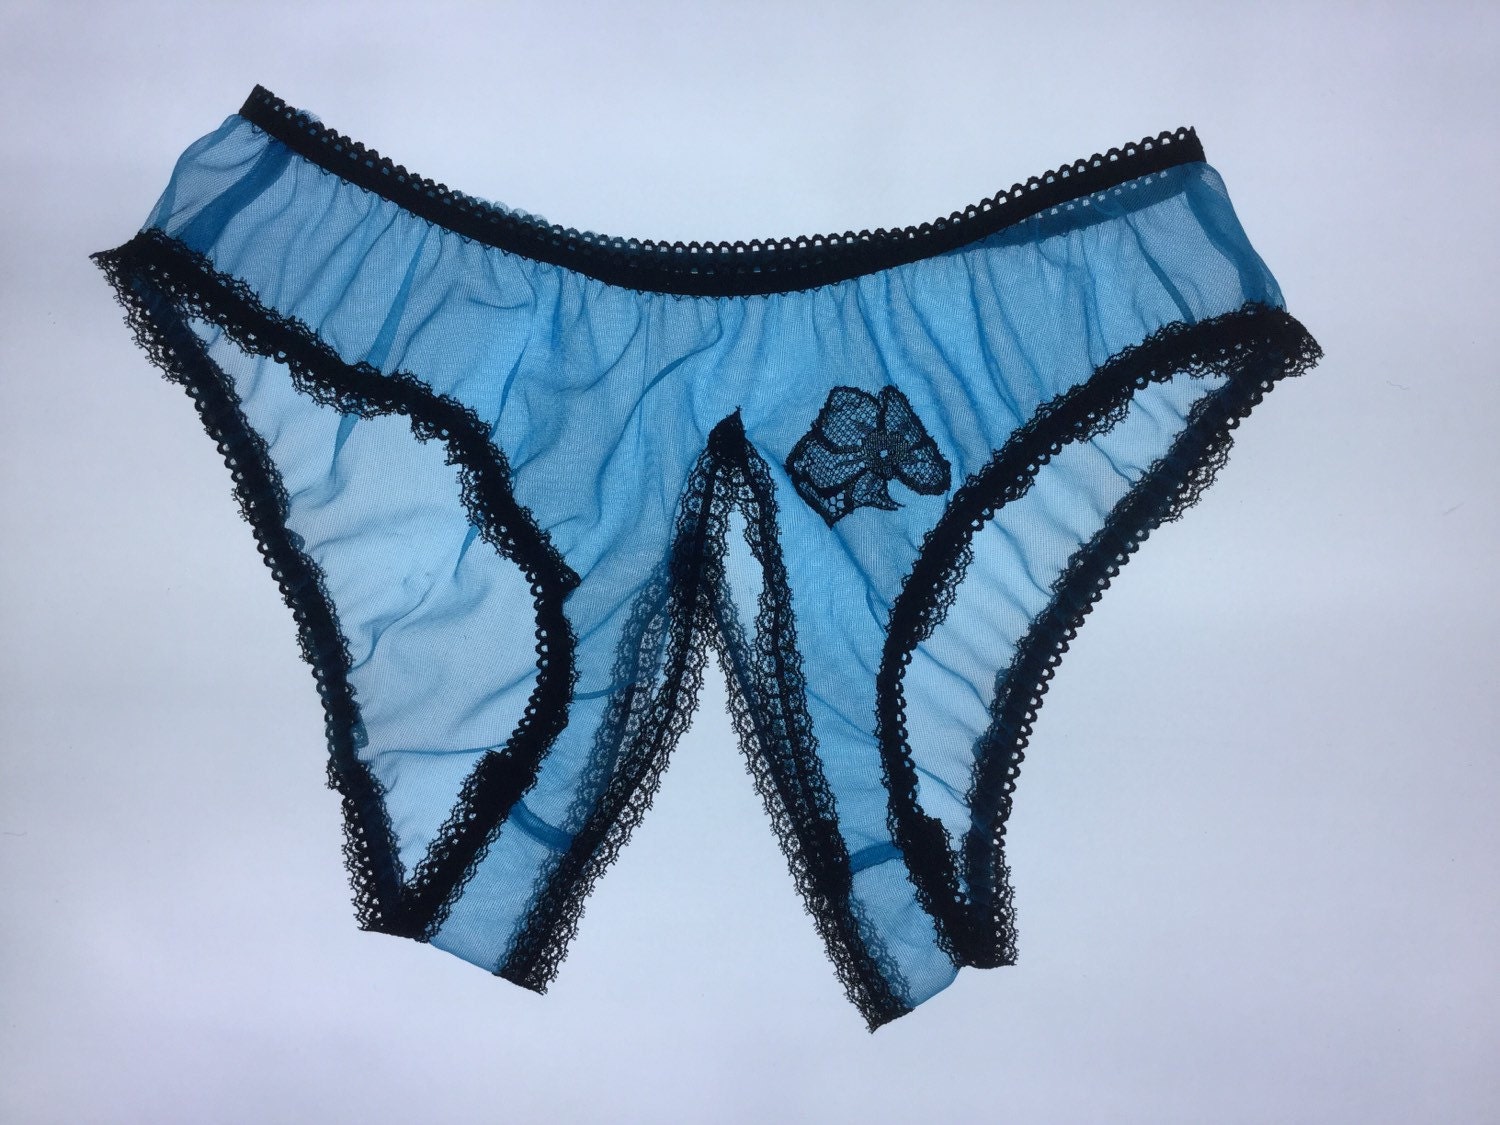 Open crotch sheer nylon panties vintage style fetish sissy